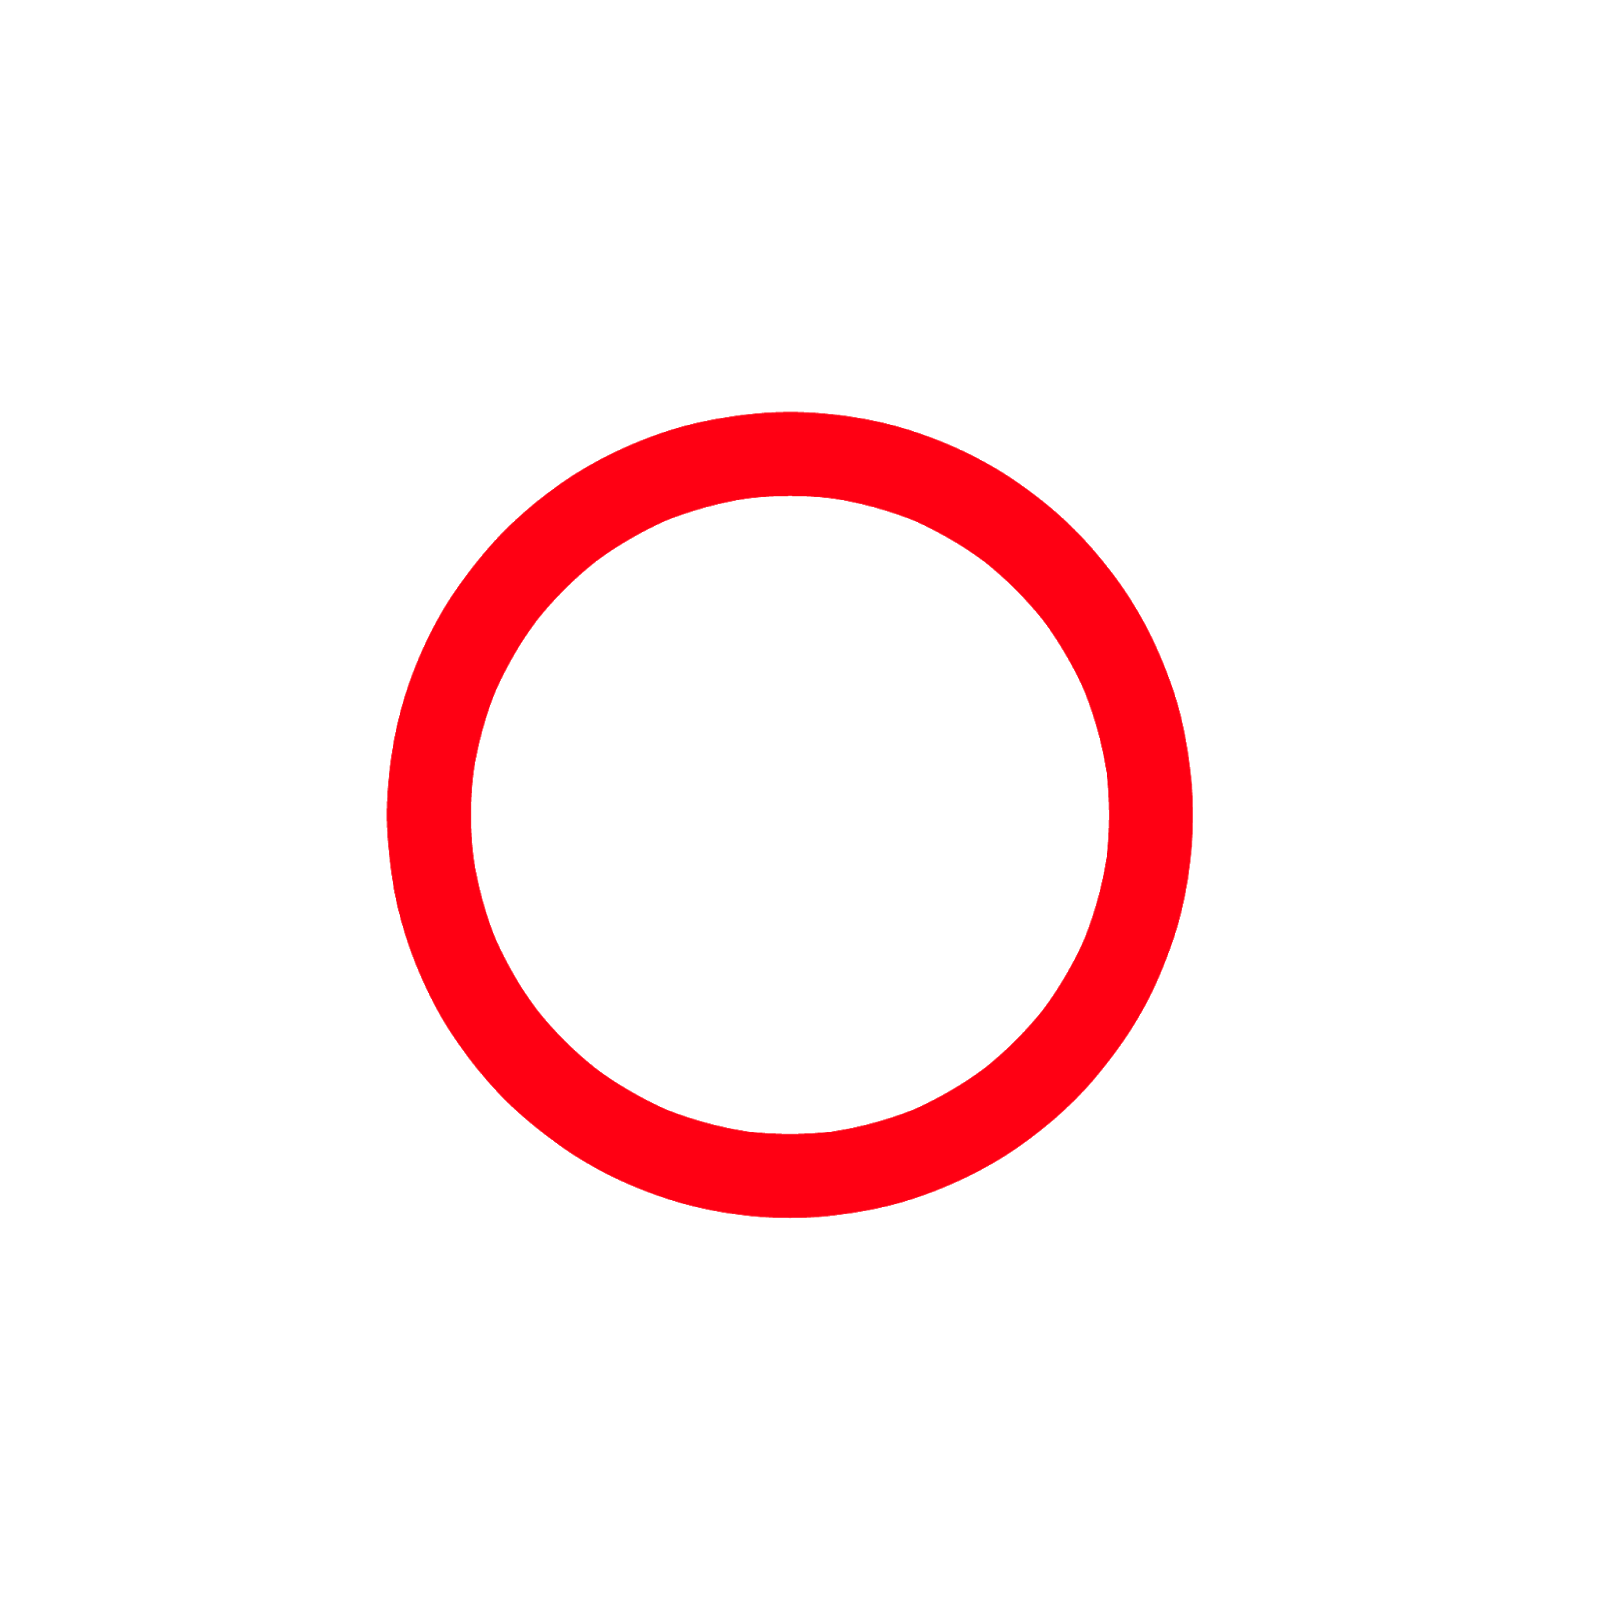  Gambar  Lingkaran Merah PNG  Transparan Samakami com